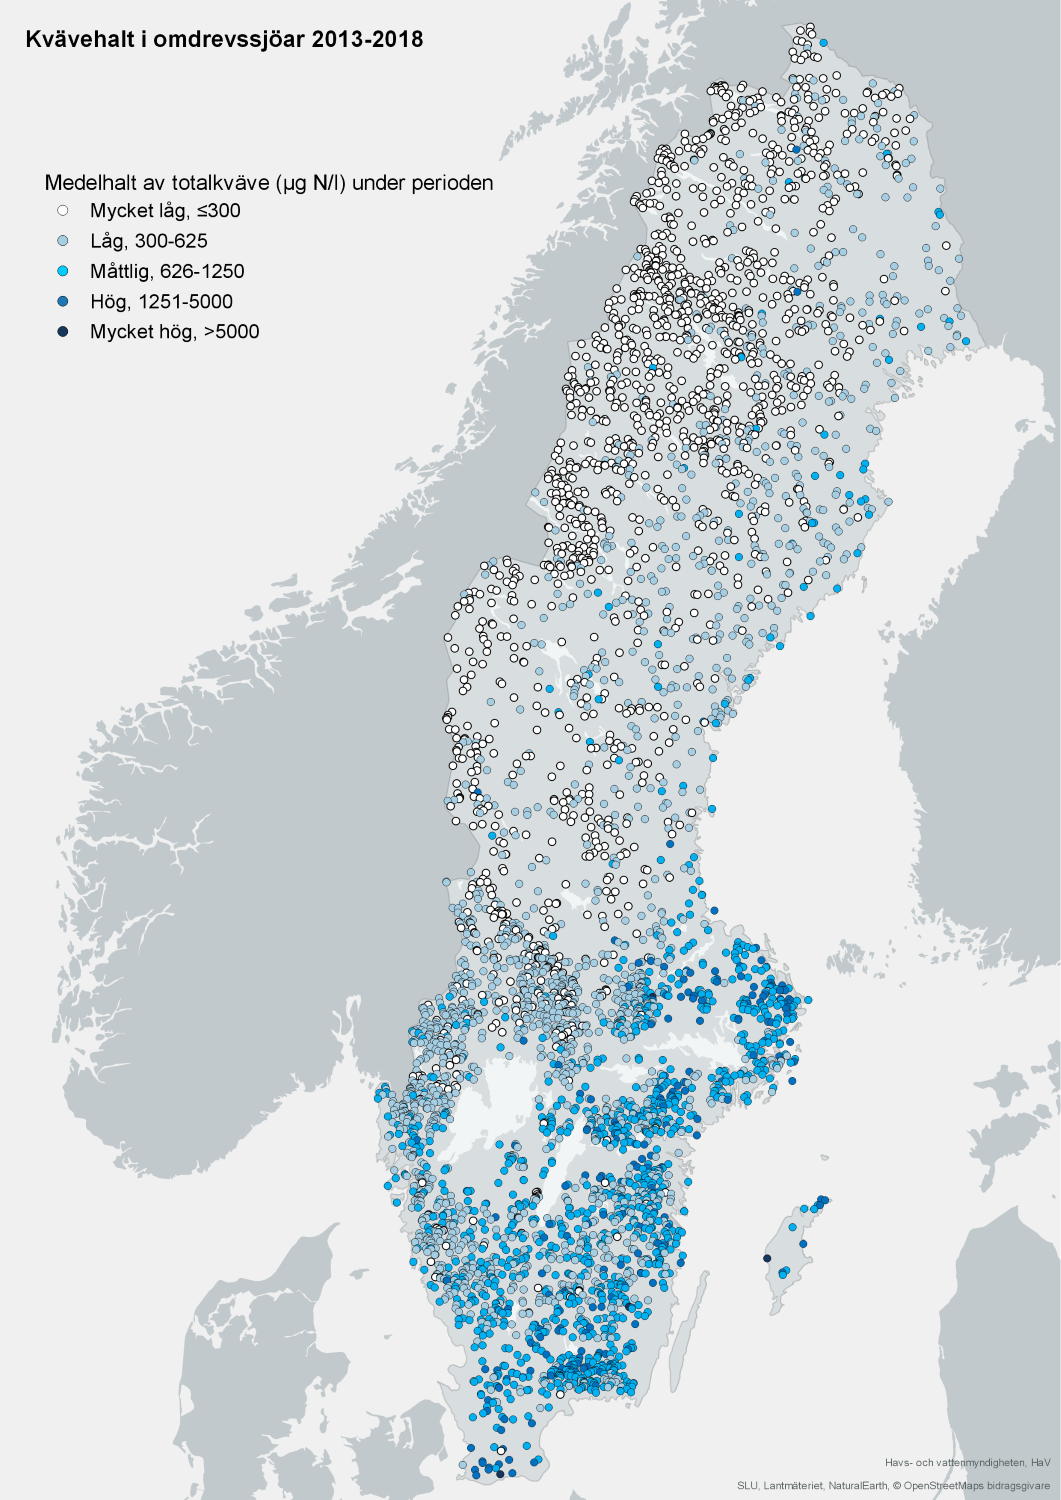 Medelhalt av totalkväve i omdrevssjöar 2013-2018. Karta, illustration.